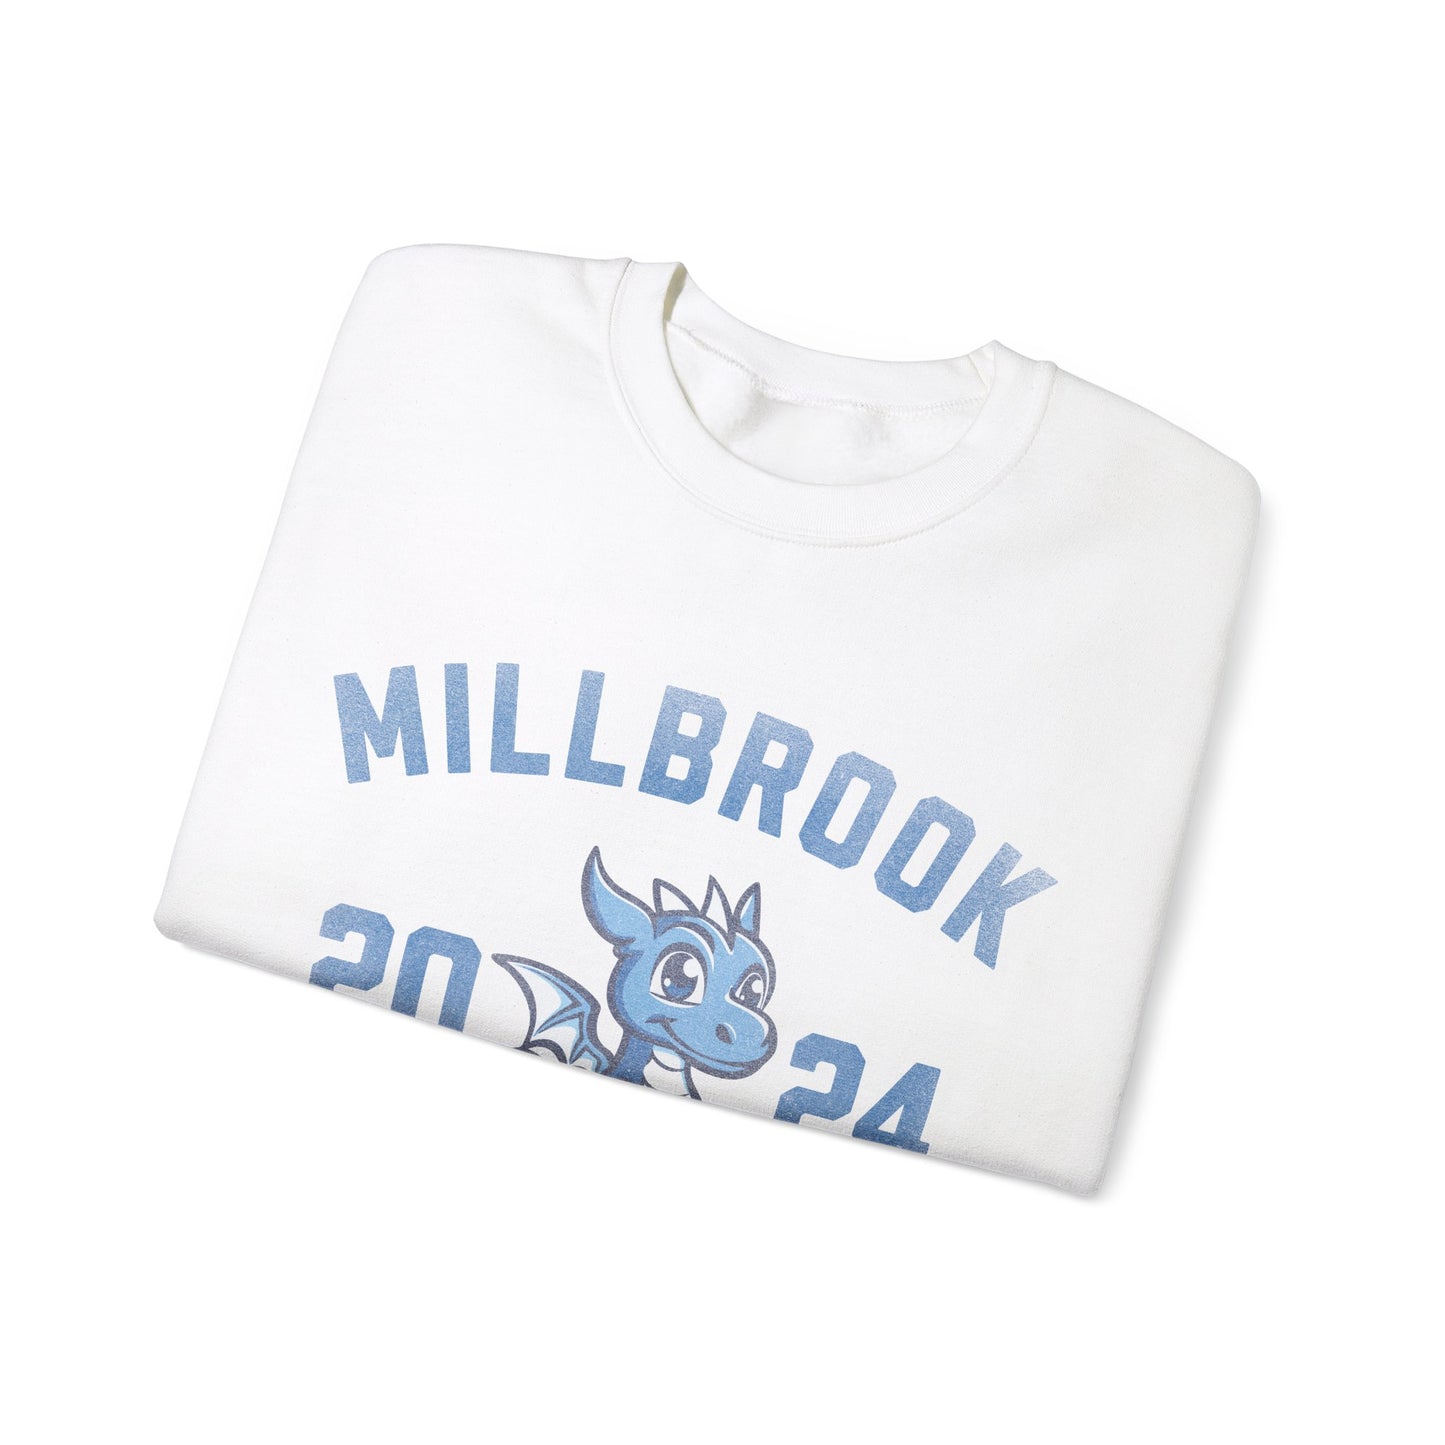 Millbrook Elementary 2024 Crewneck - Adult